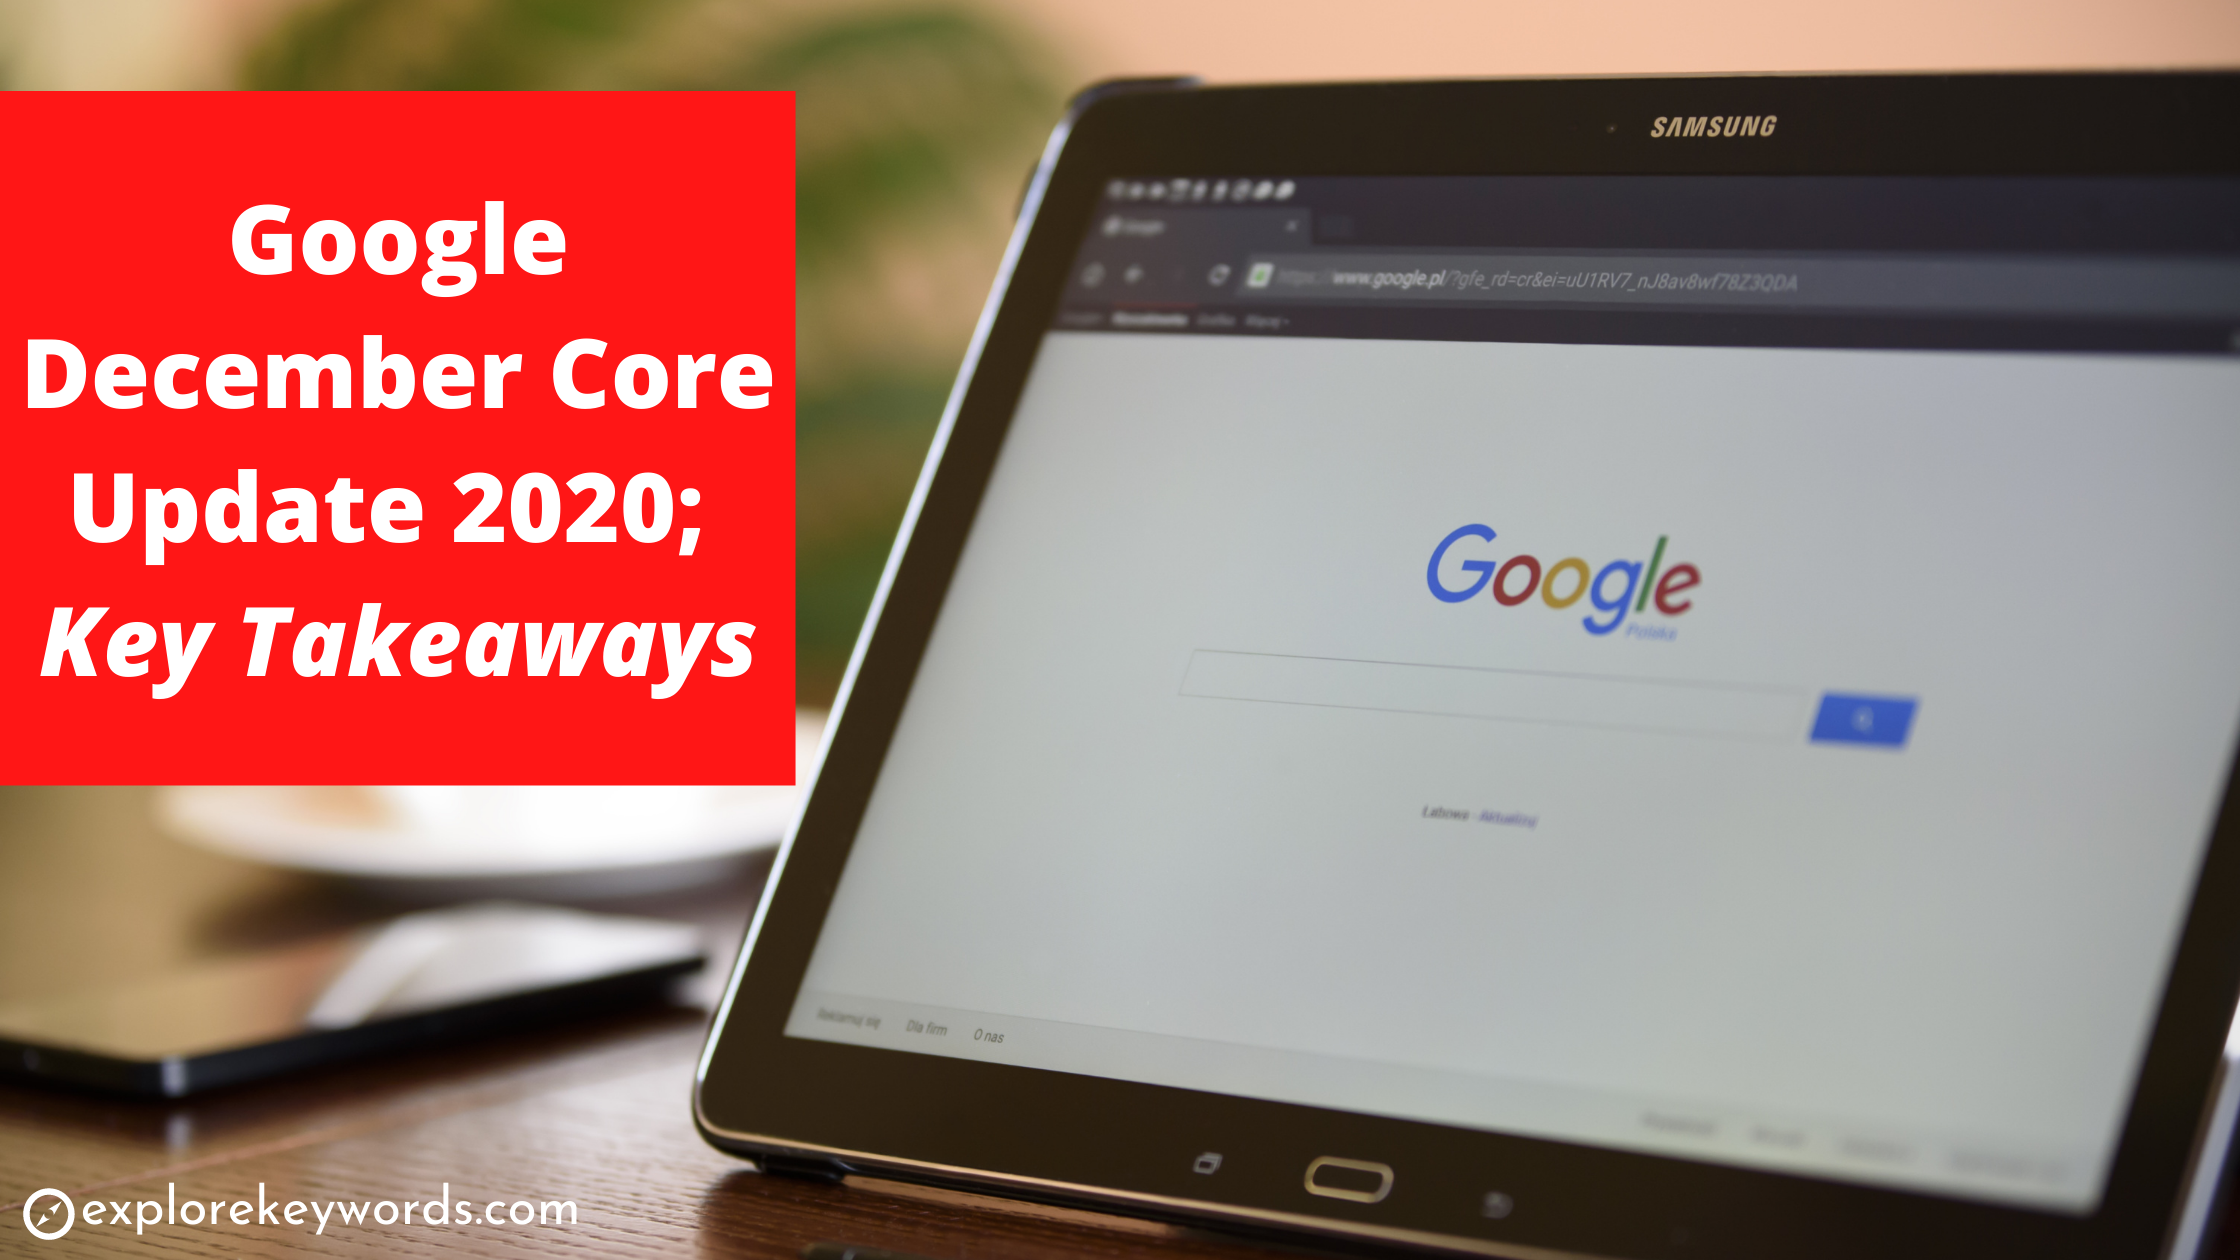 Google December Core Update 2020